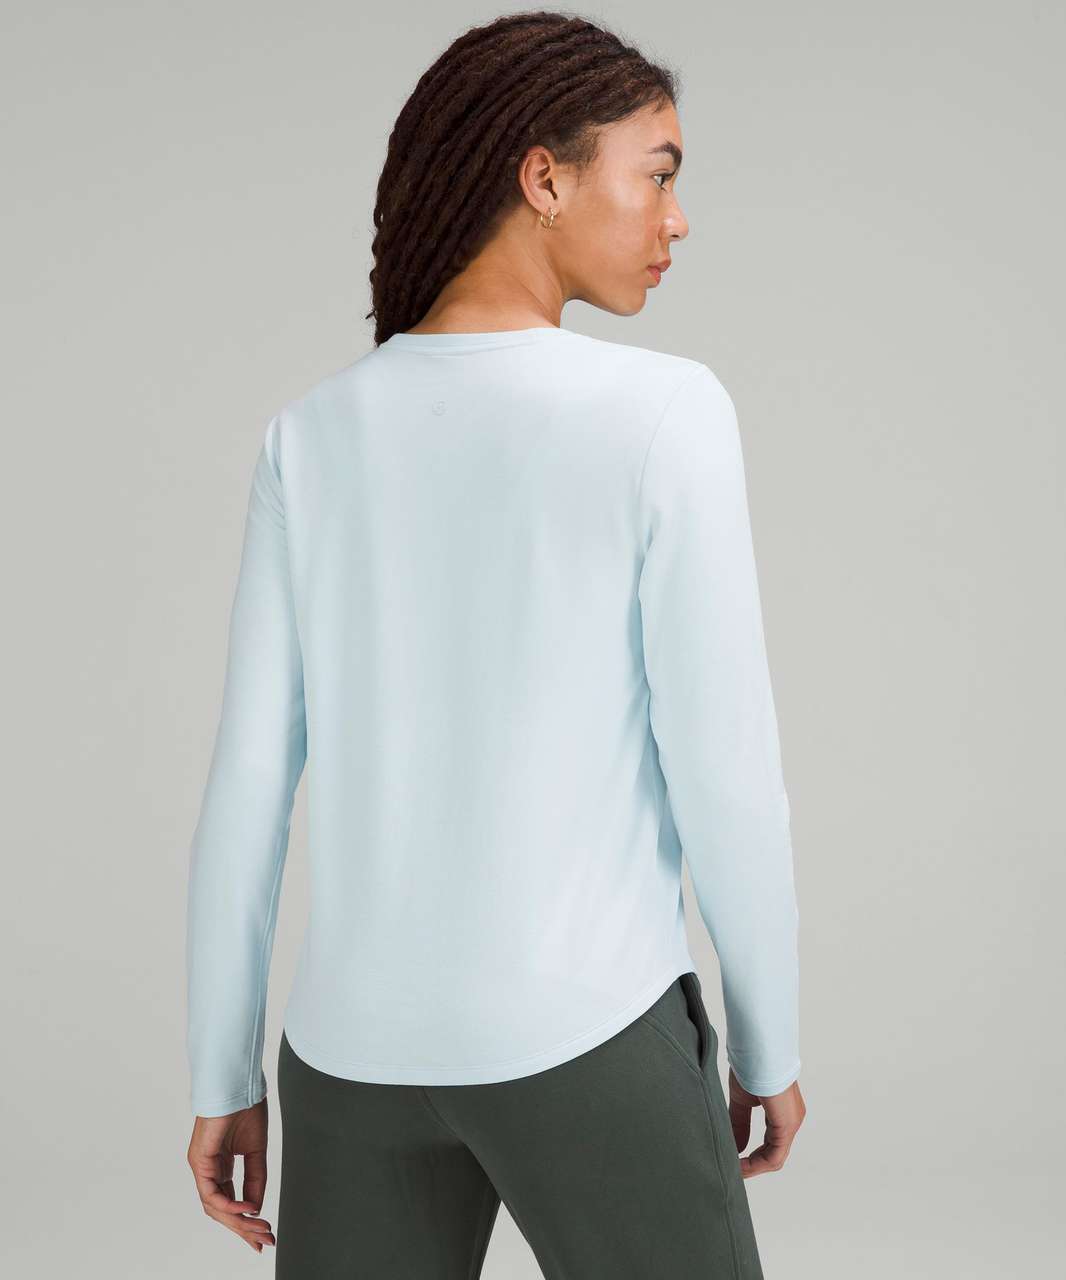 Lululemon Love Modal Fleece Long Sleeve Shirt - Powder Blue